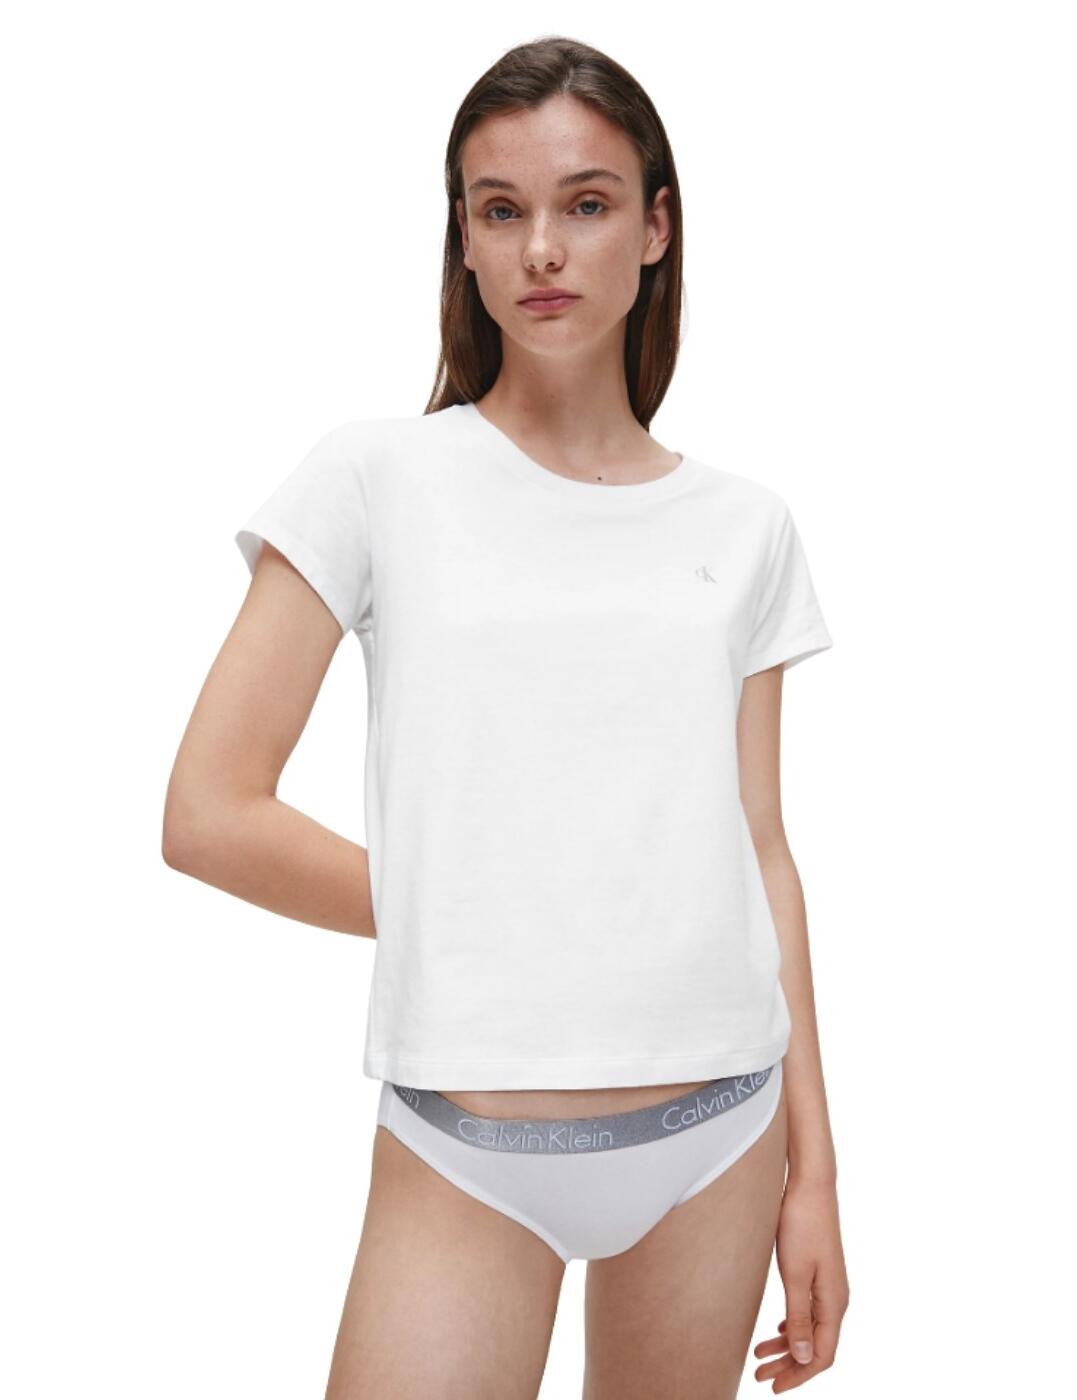 Calvin Klein CK One Cotton Crew Neck T-Shirt 2 Pack - Belle Lingerie